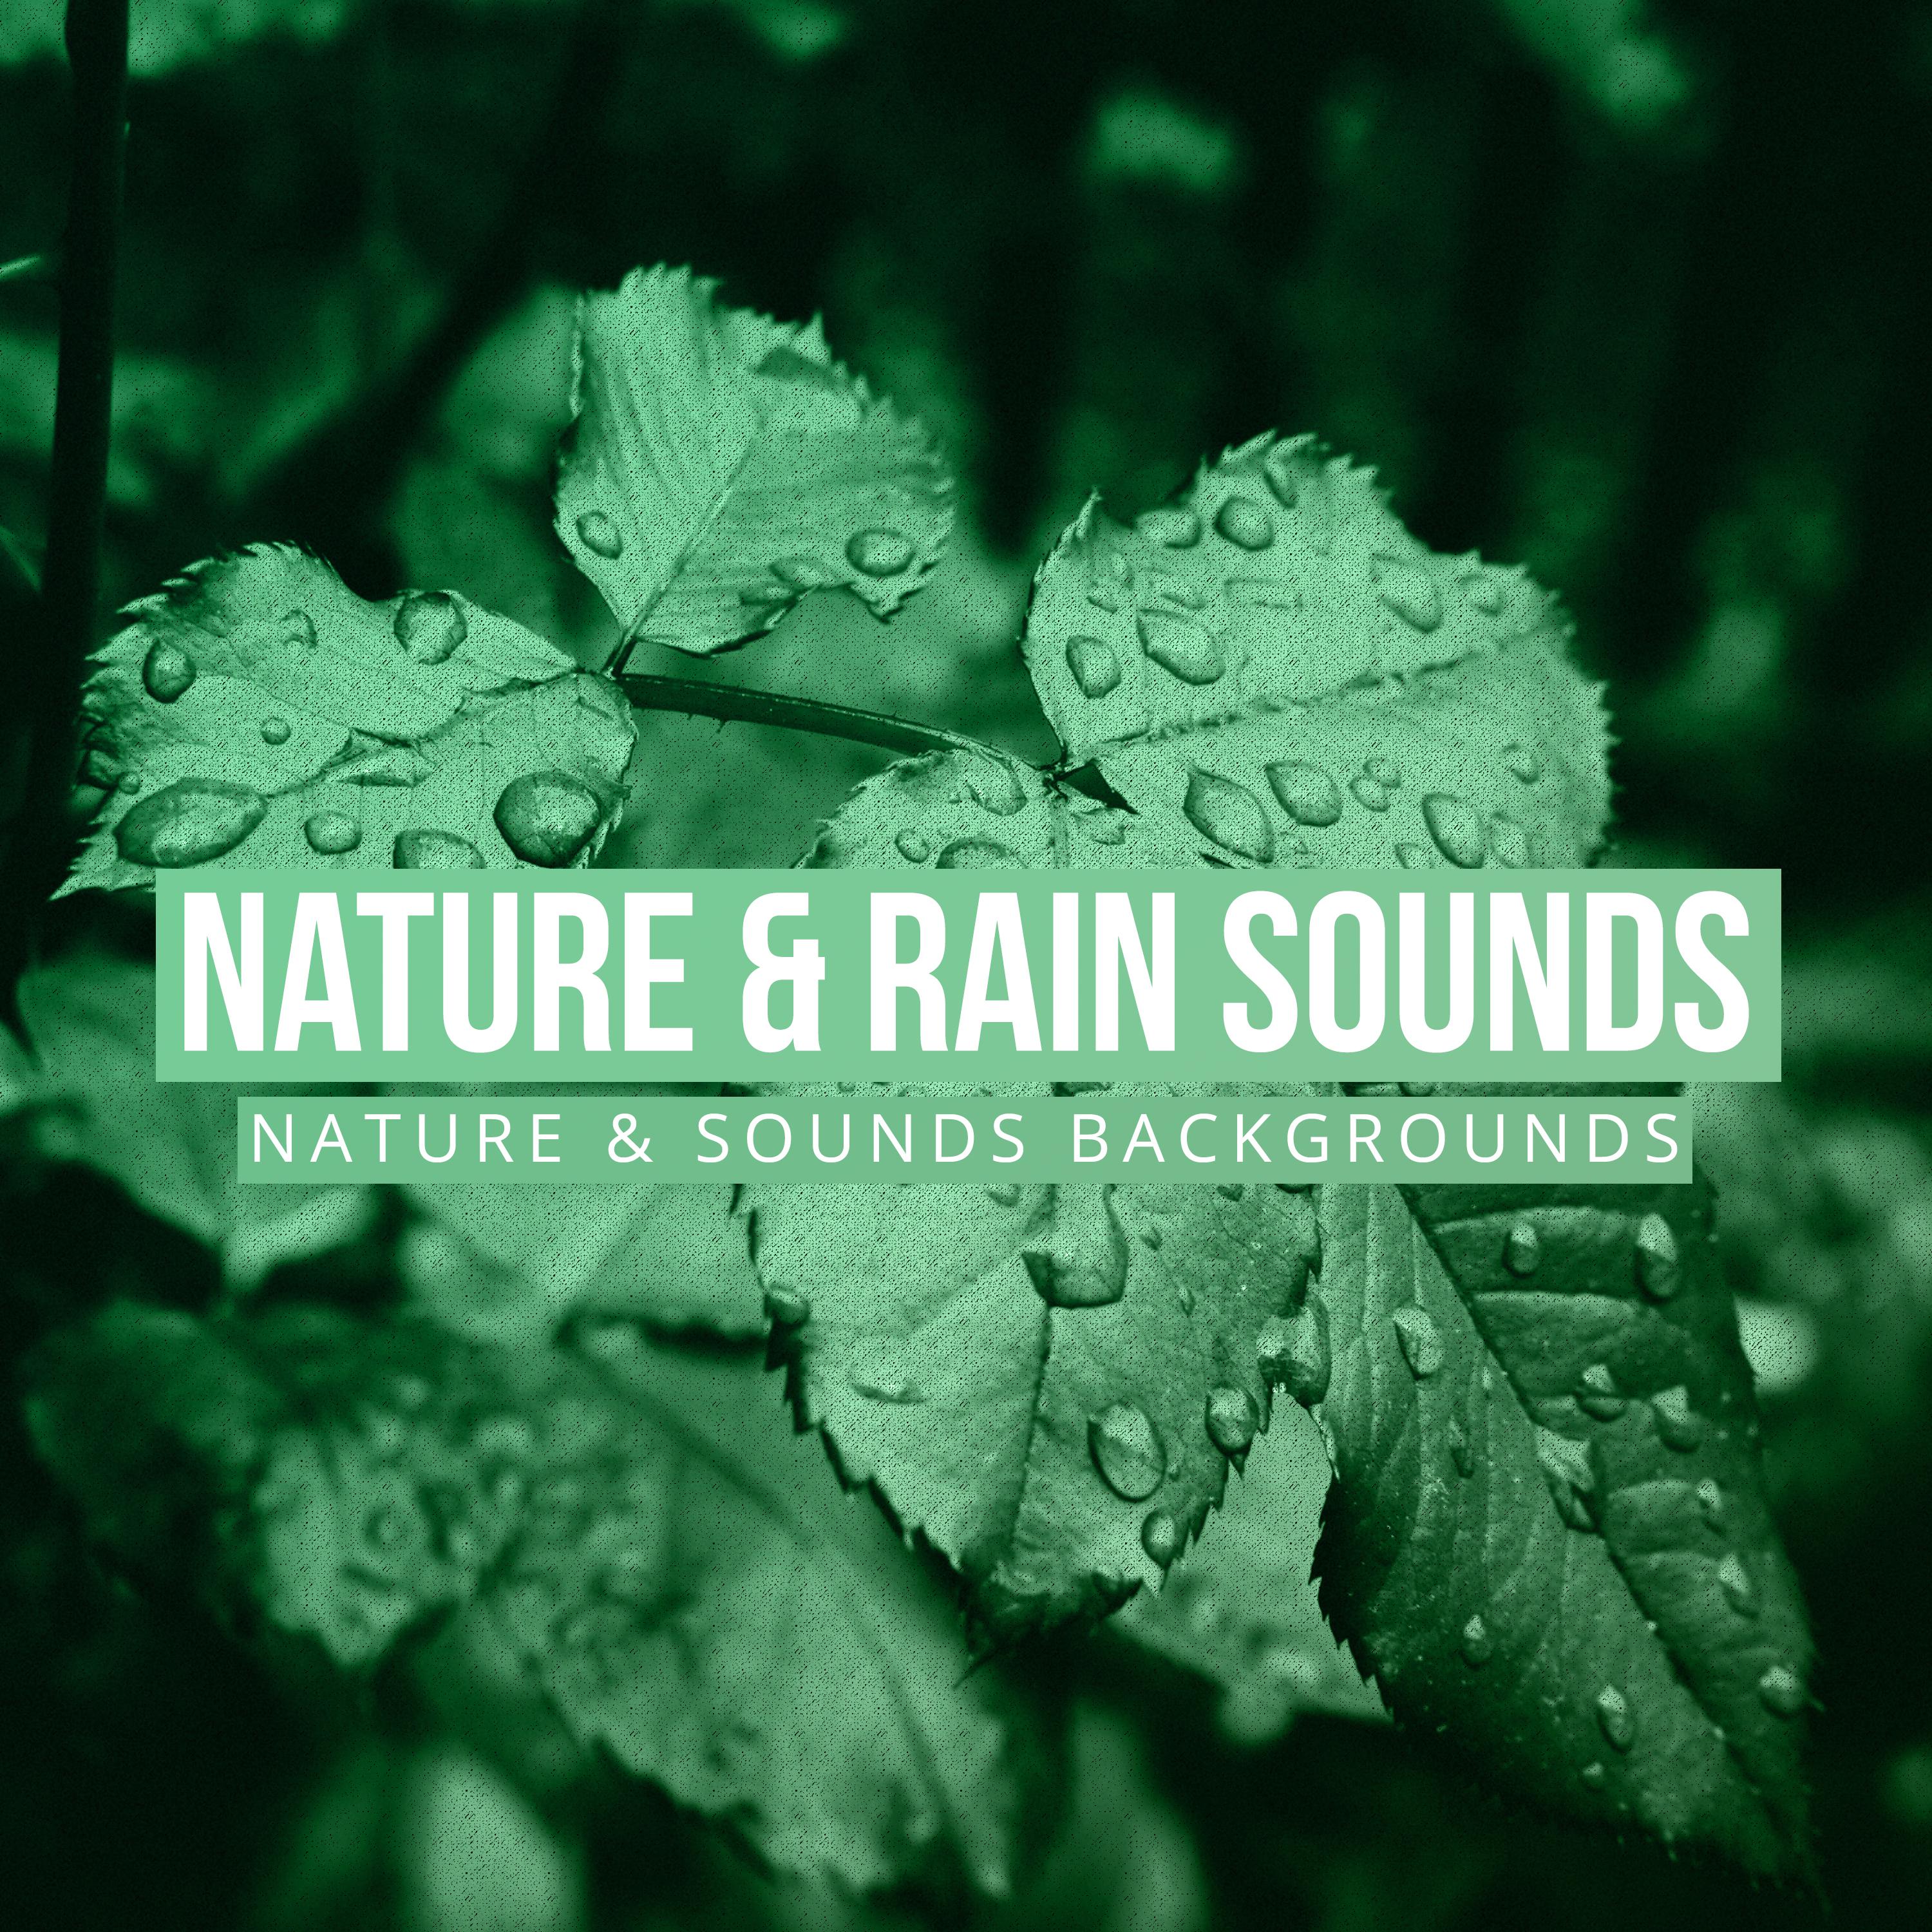 Nature & Rain Sounds